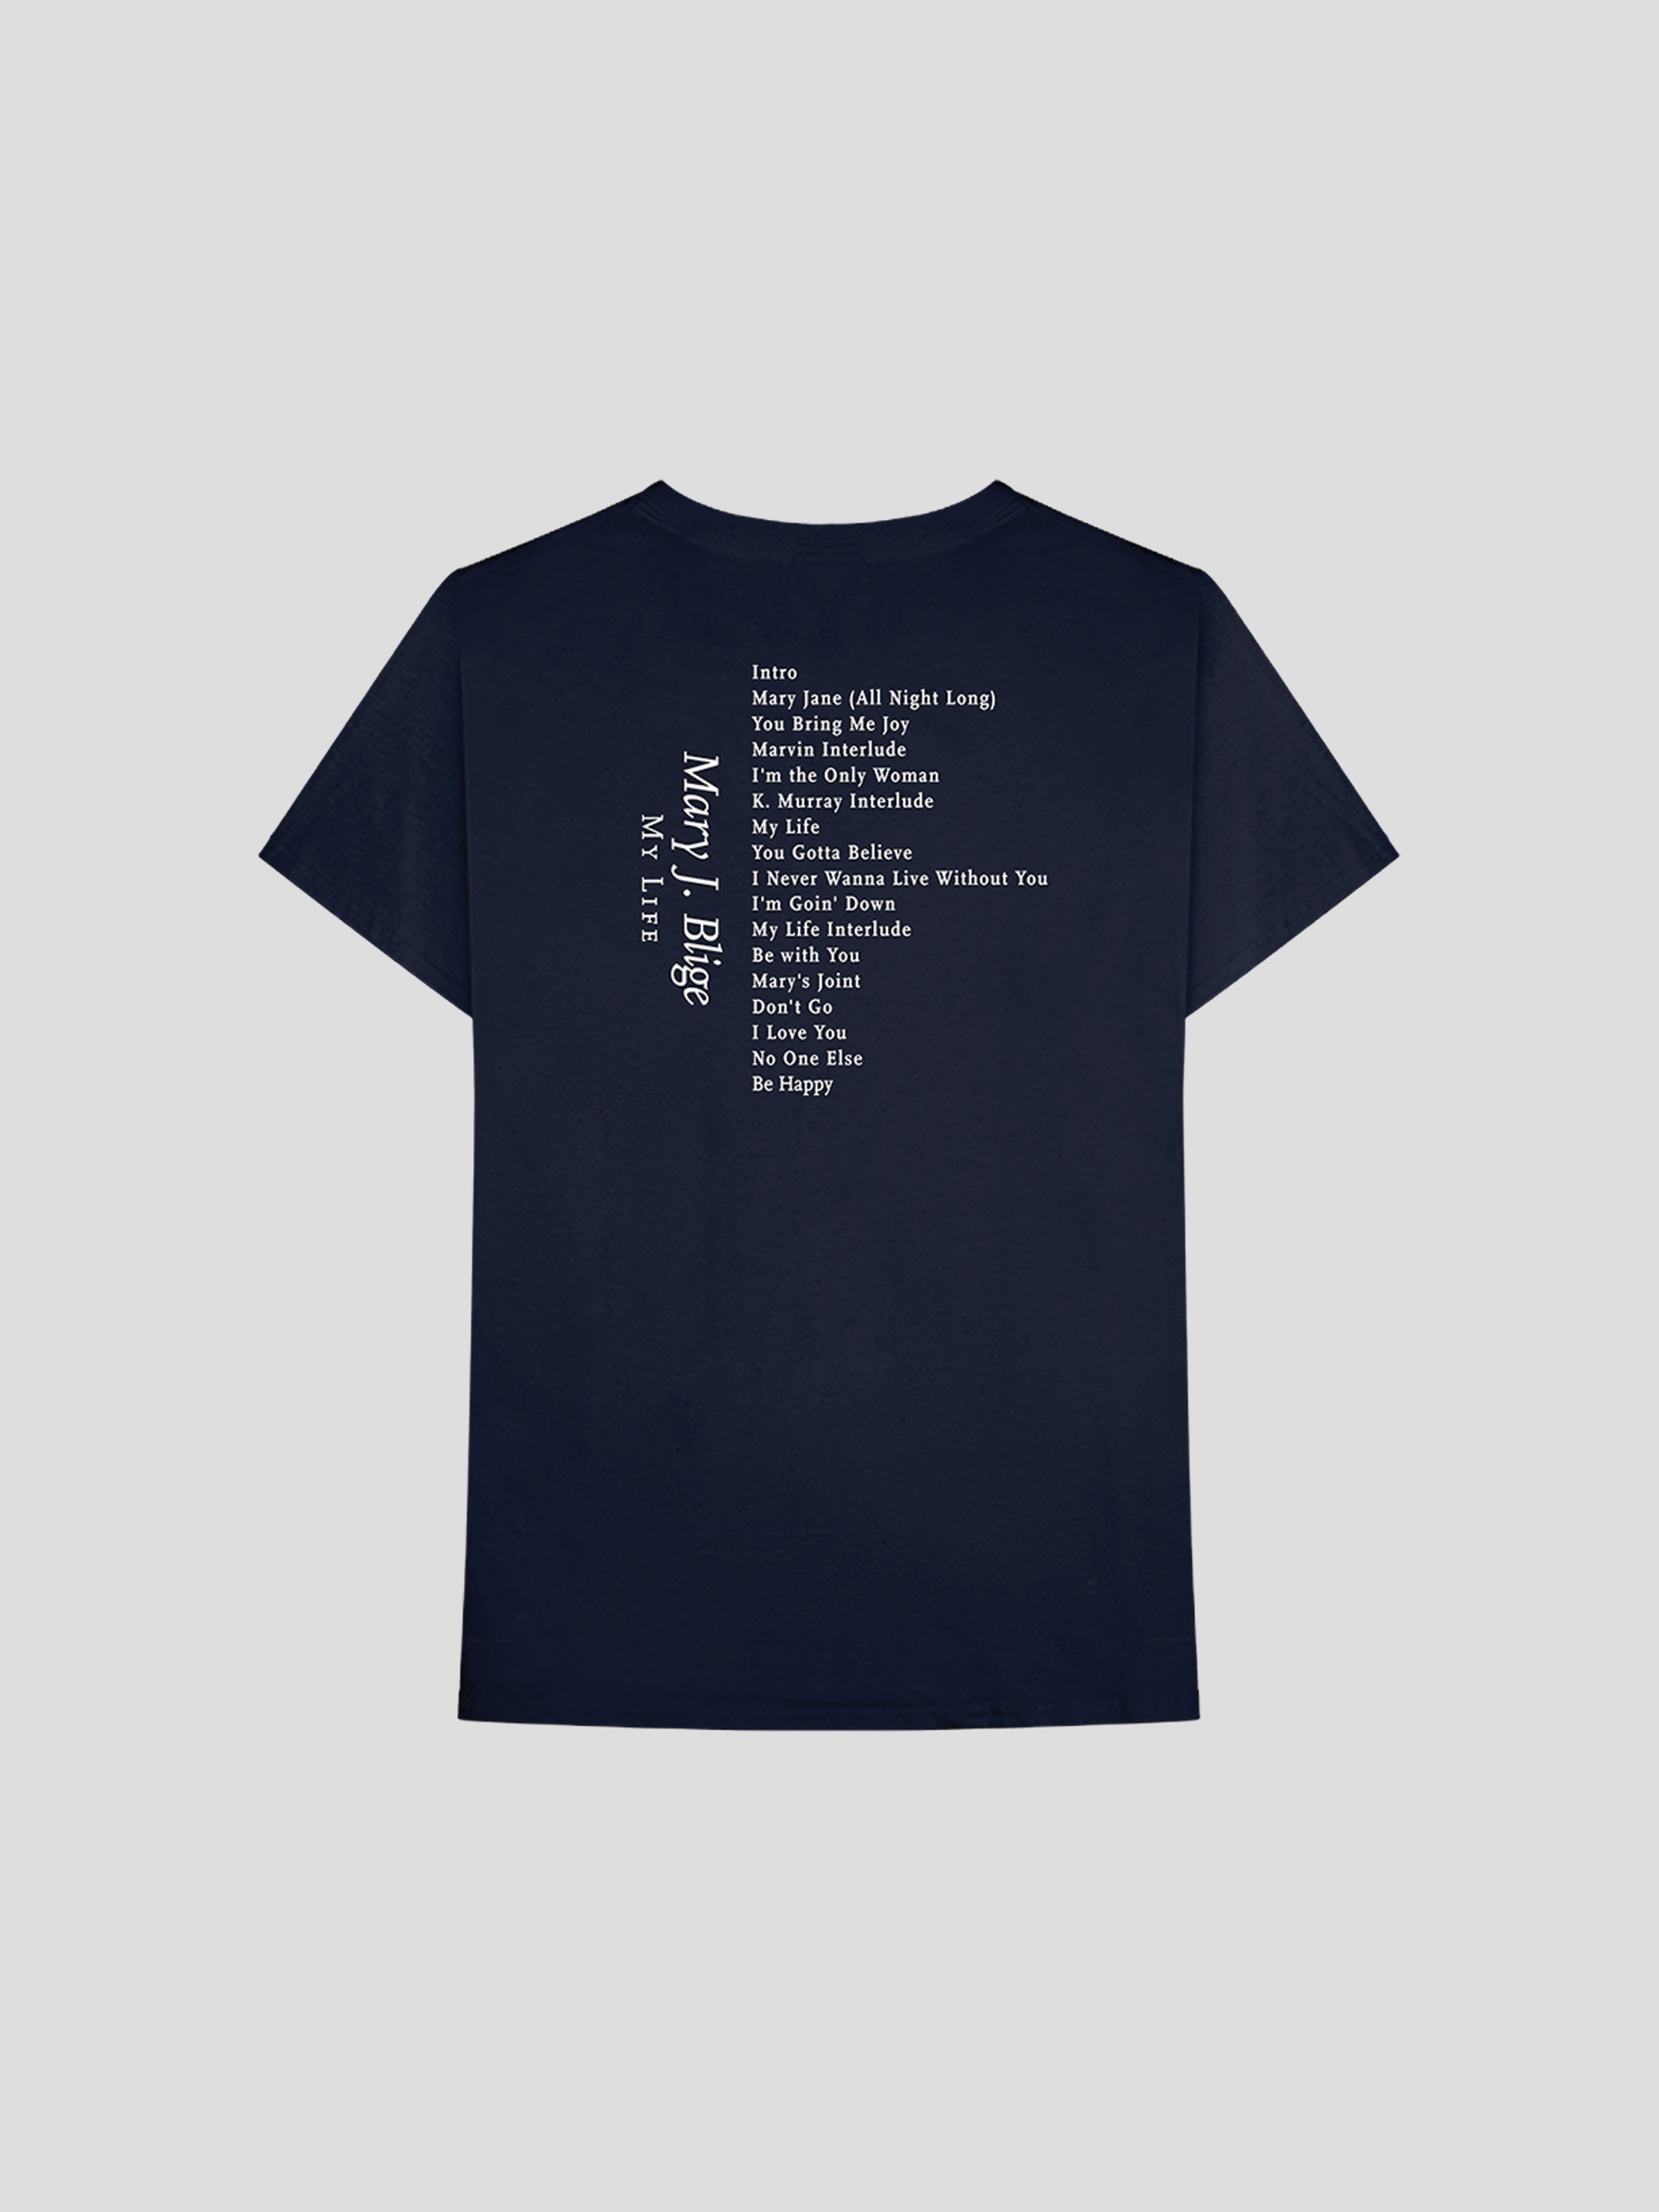 My Life Tracklist T-Shirt